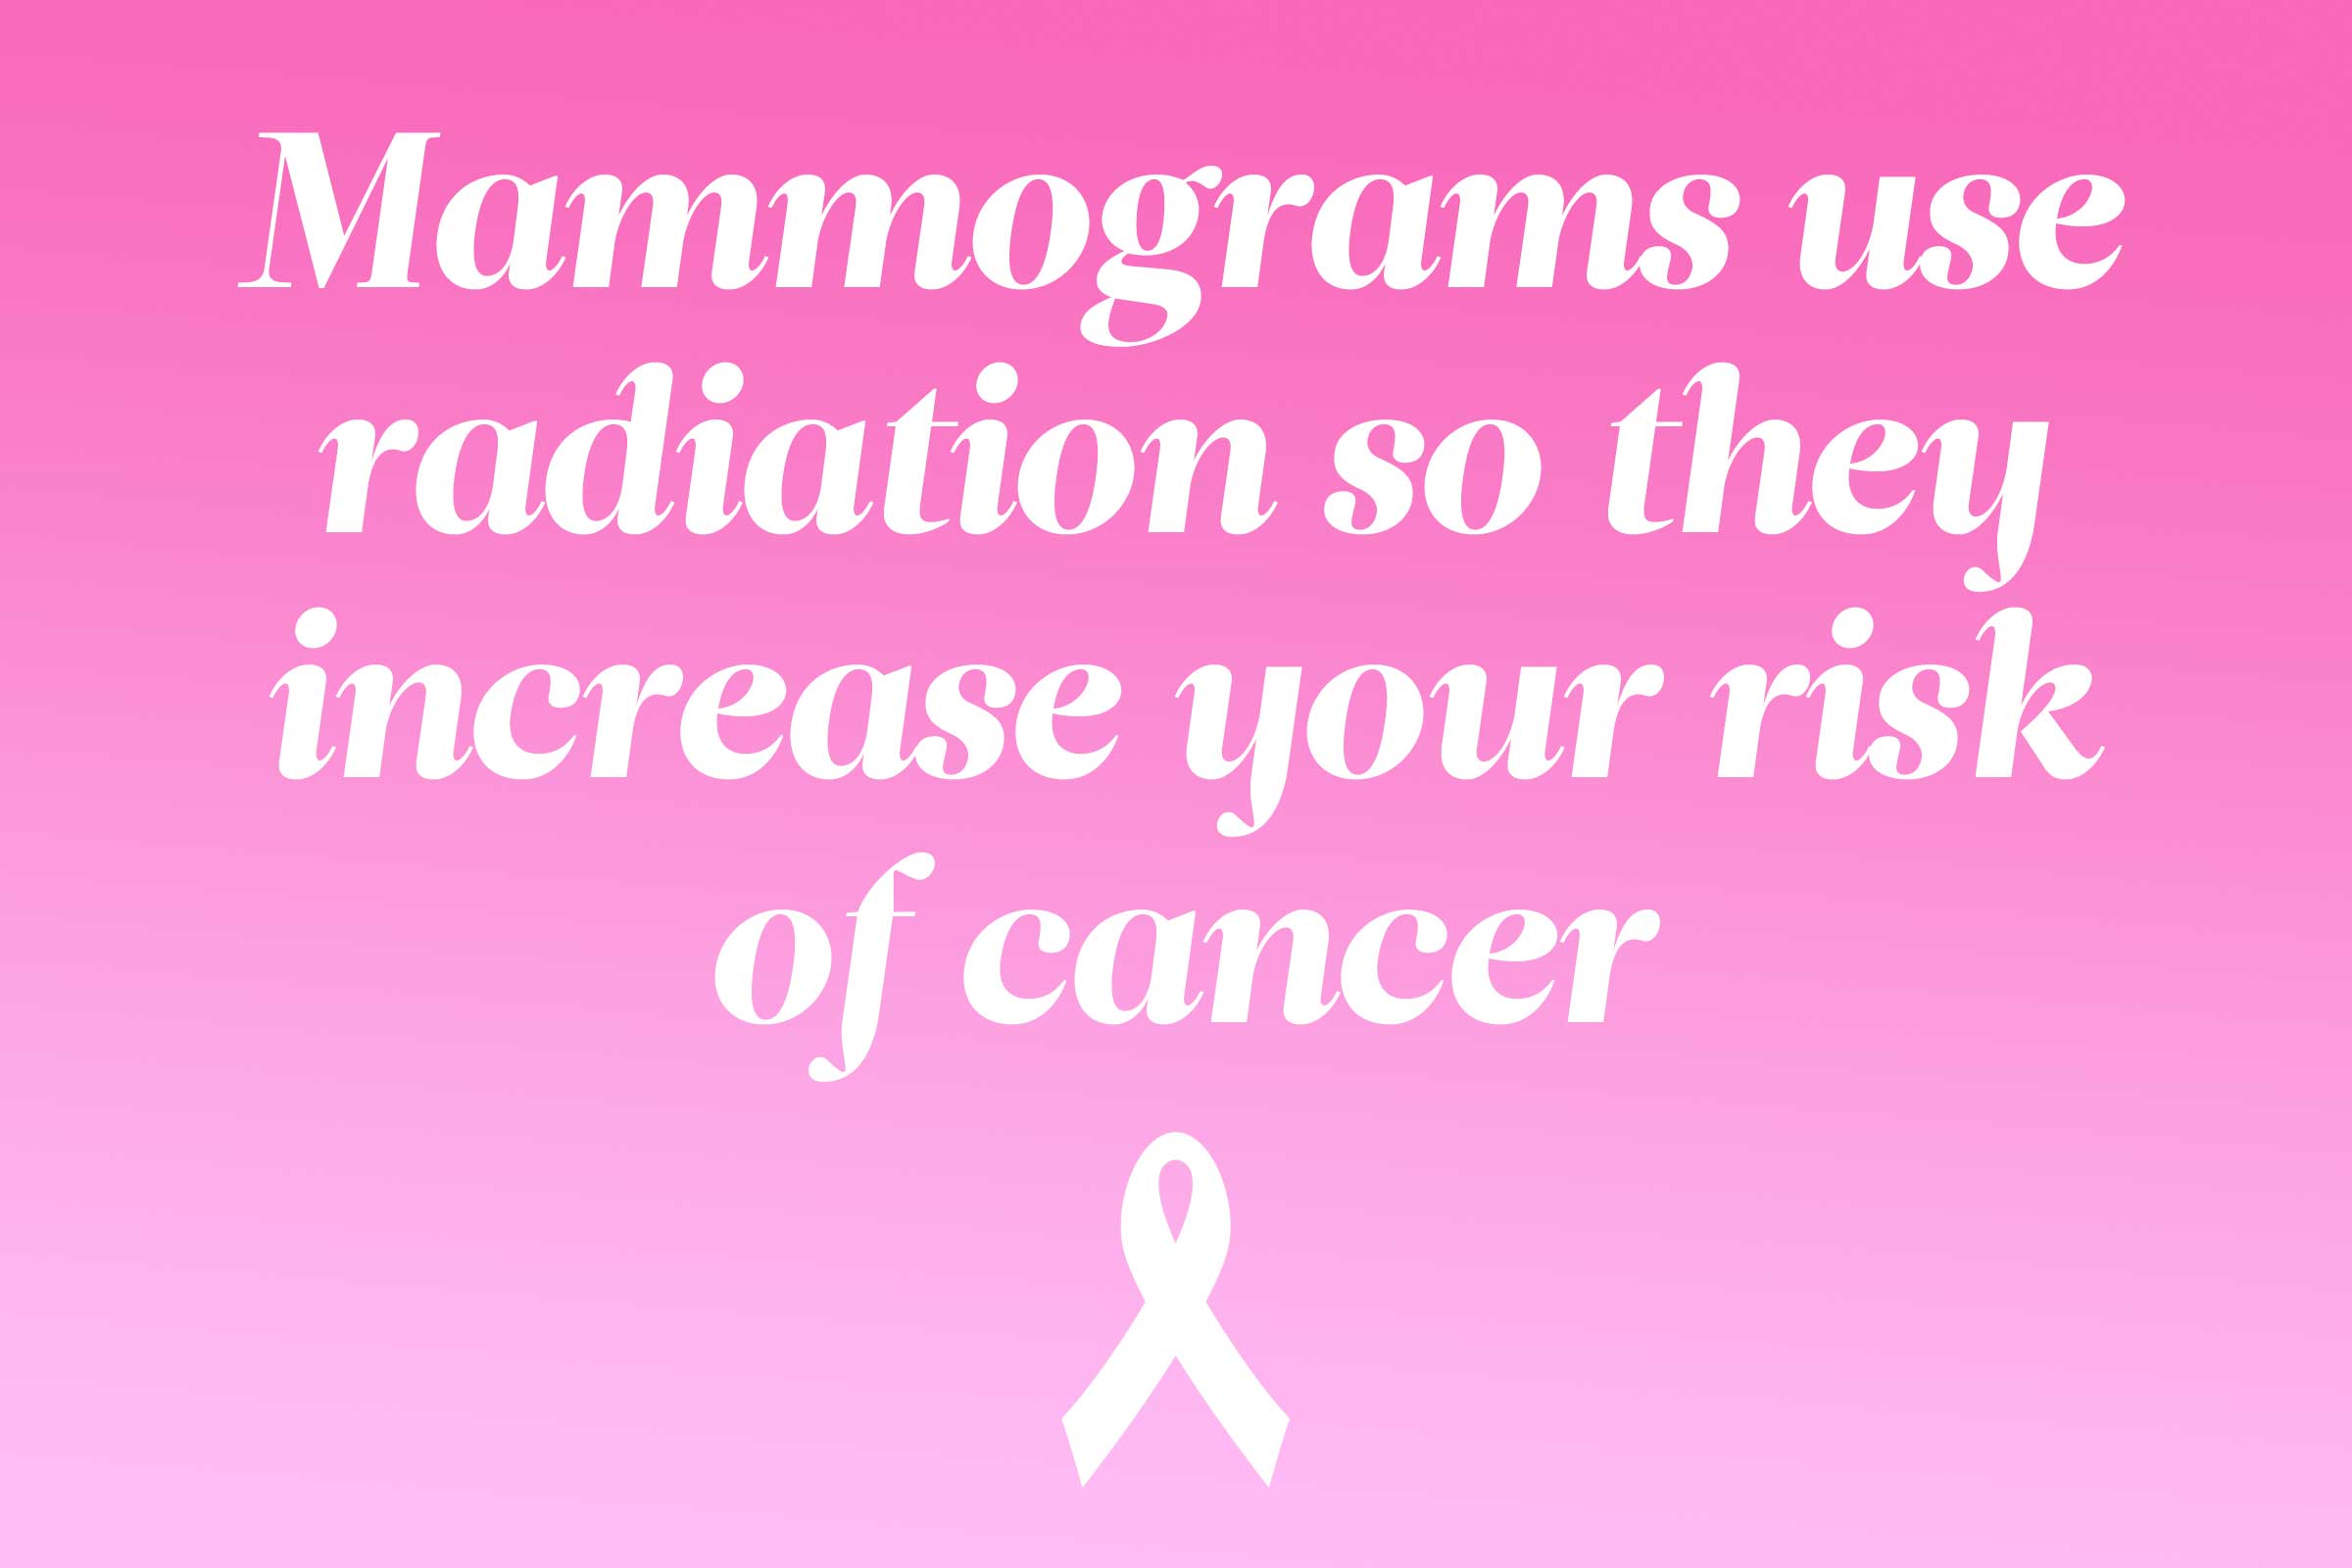 myth: mammograms increase cancer risk